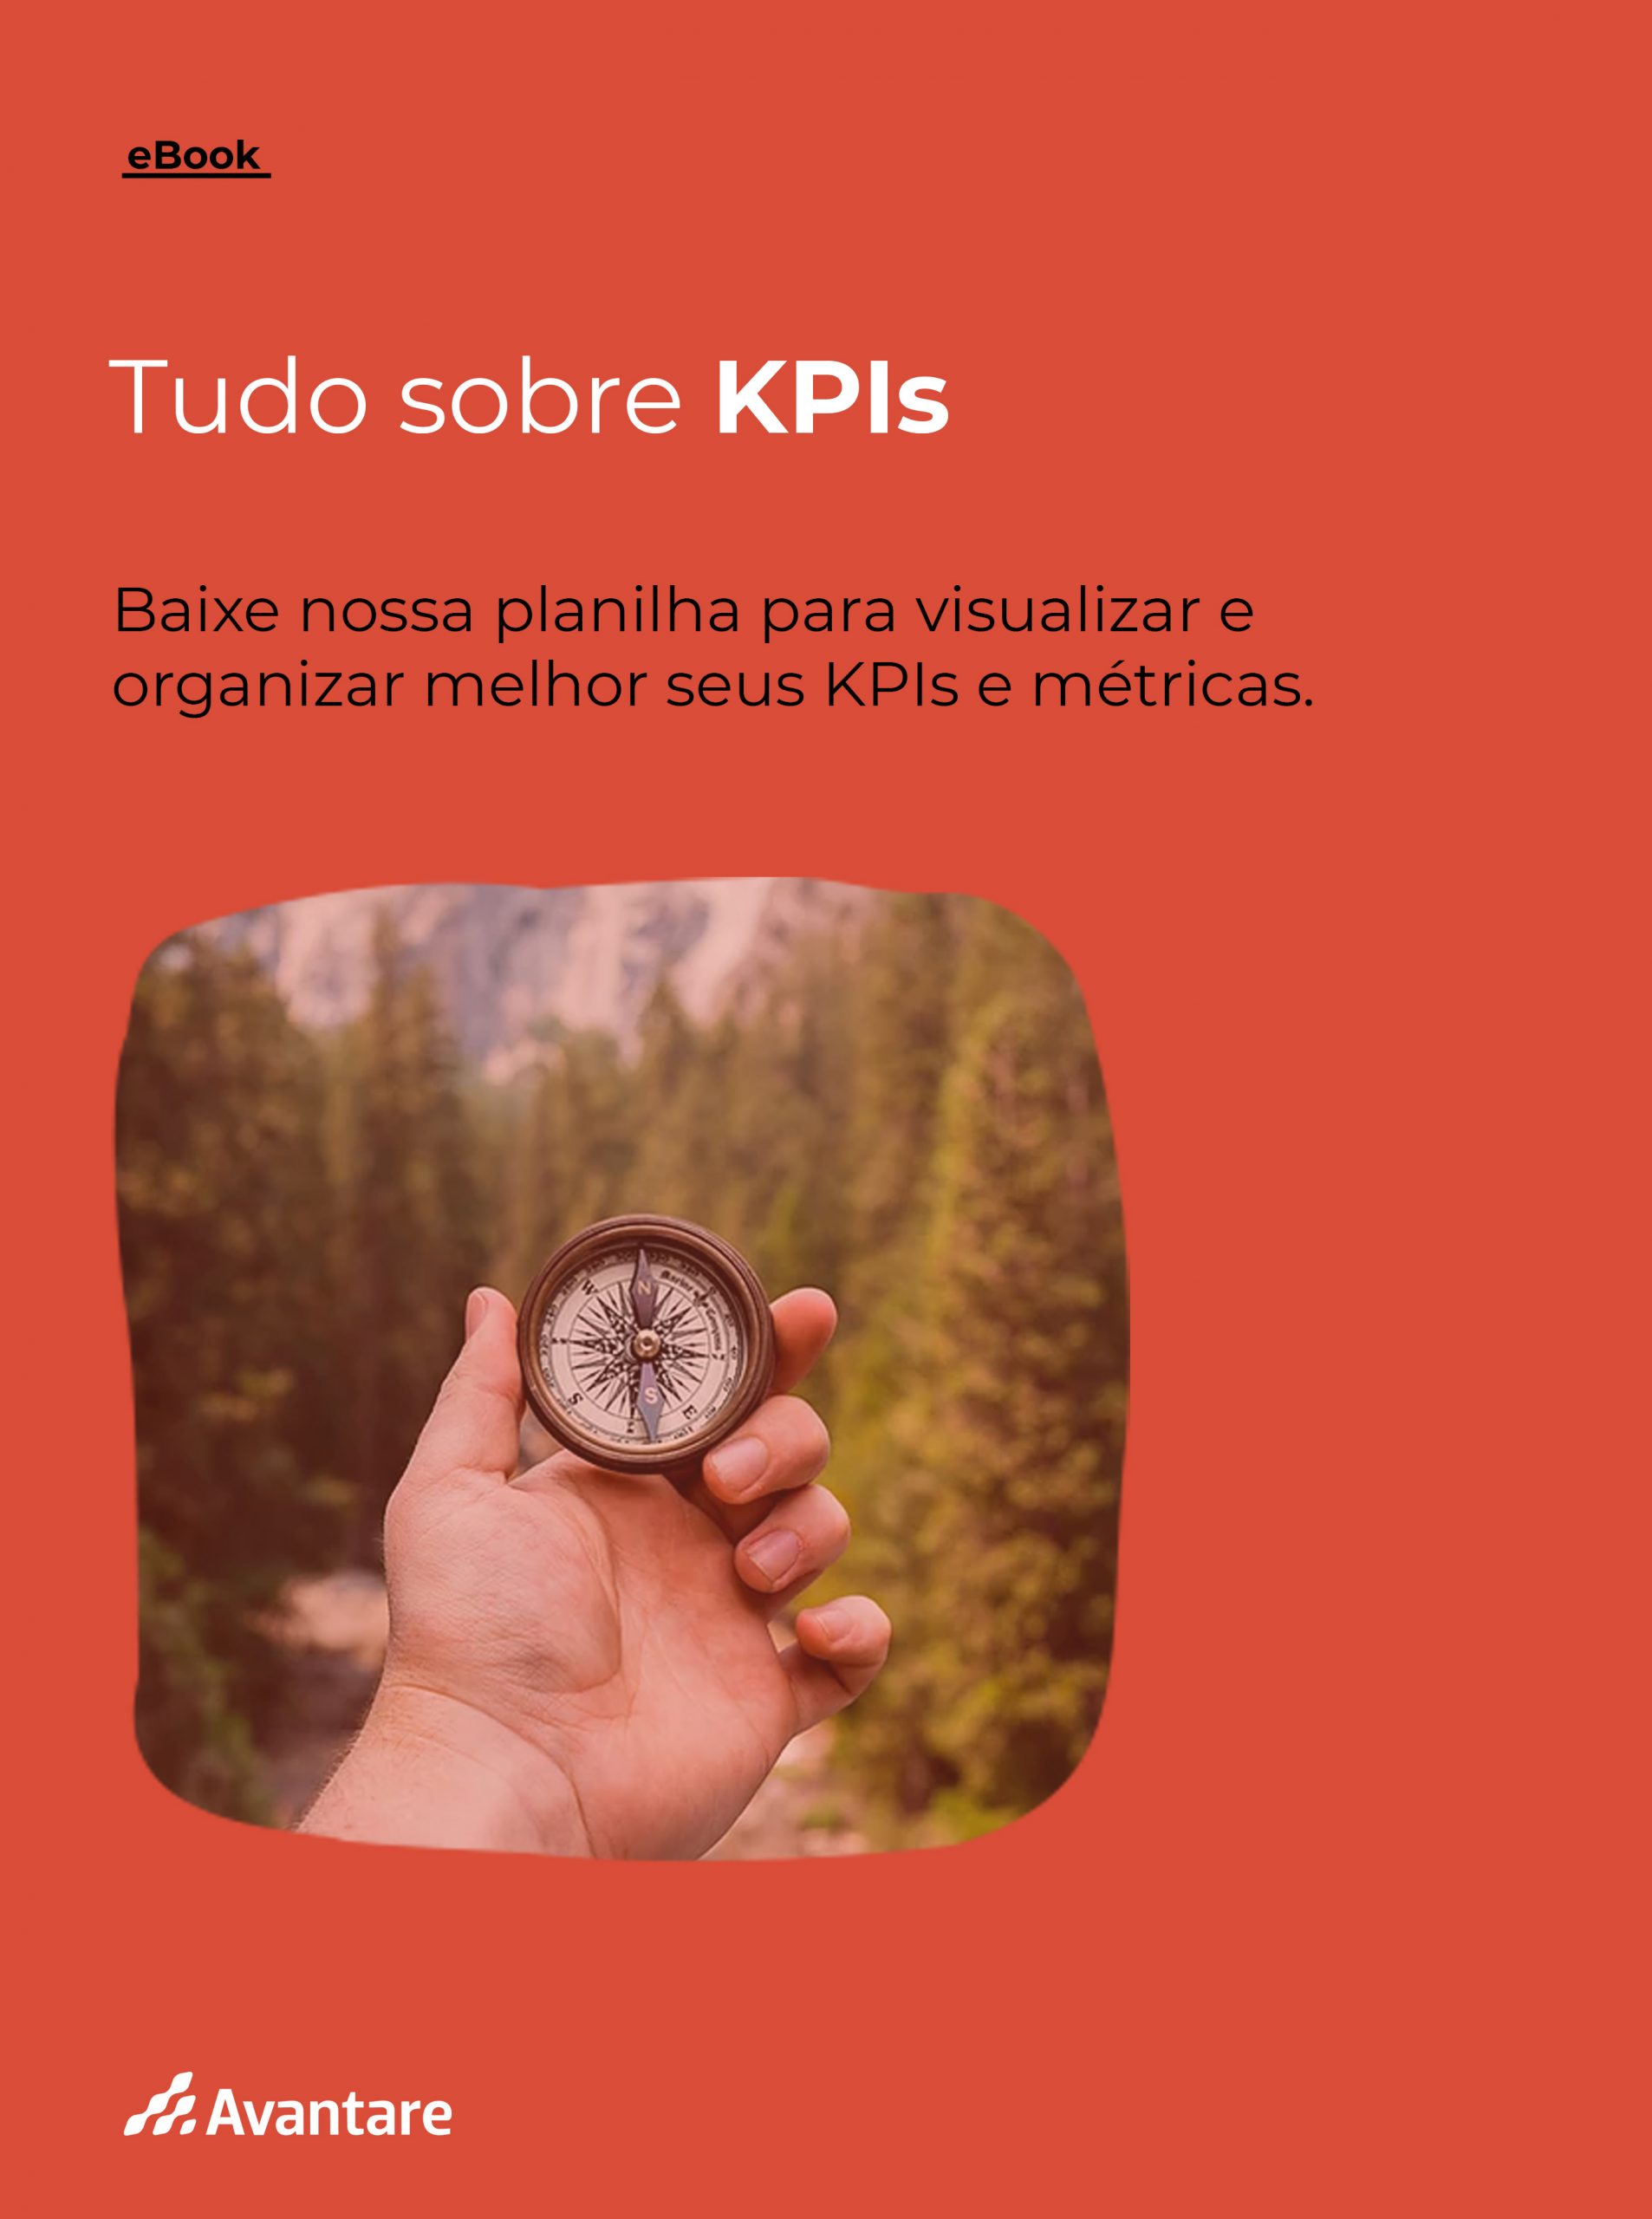 E-book_capa_Tudo_Sobre_KPIs